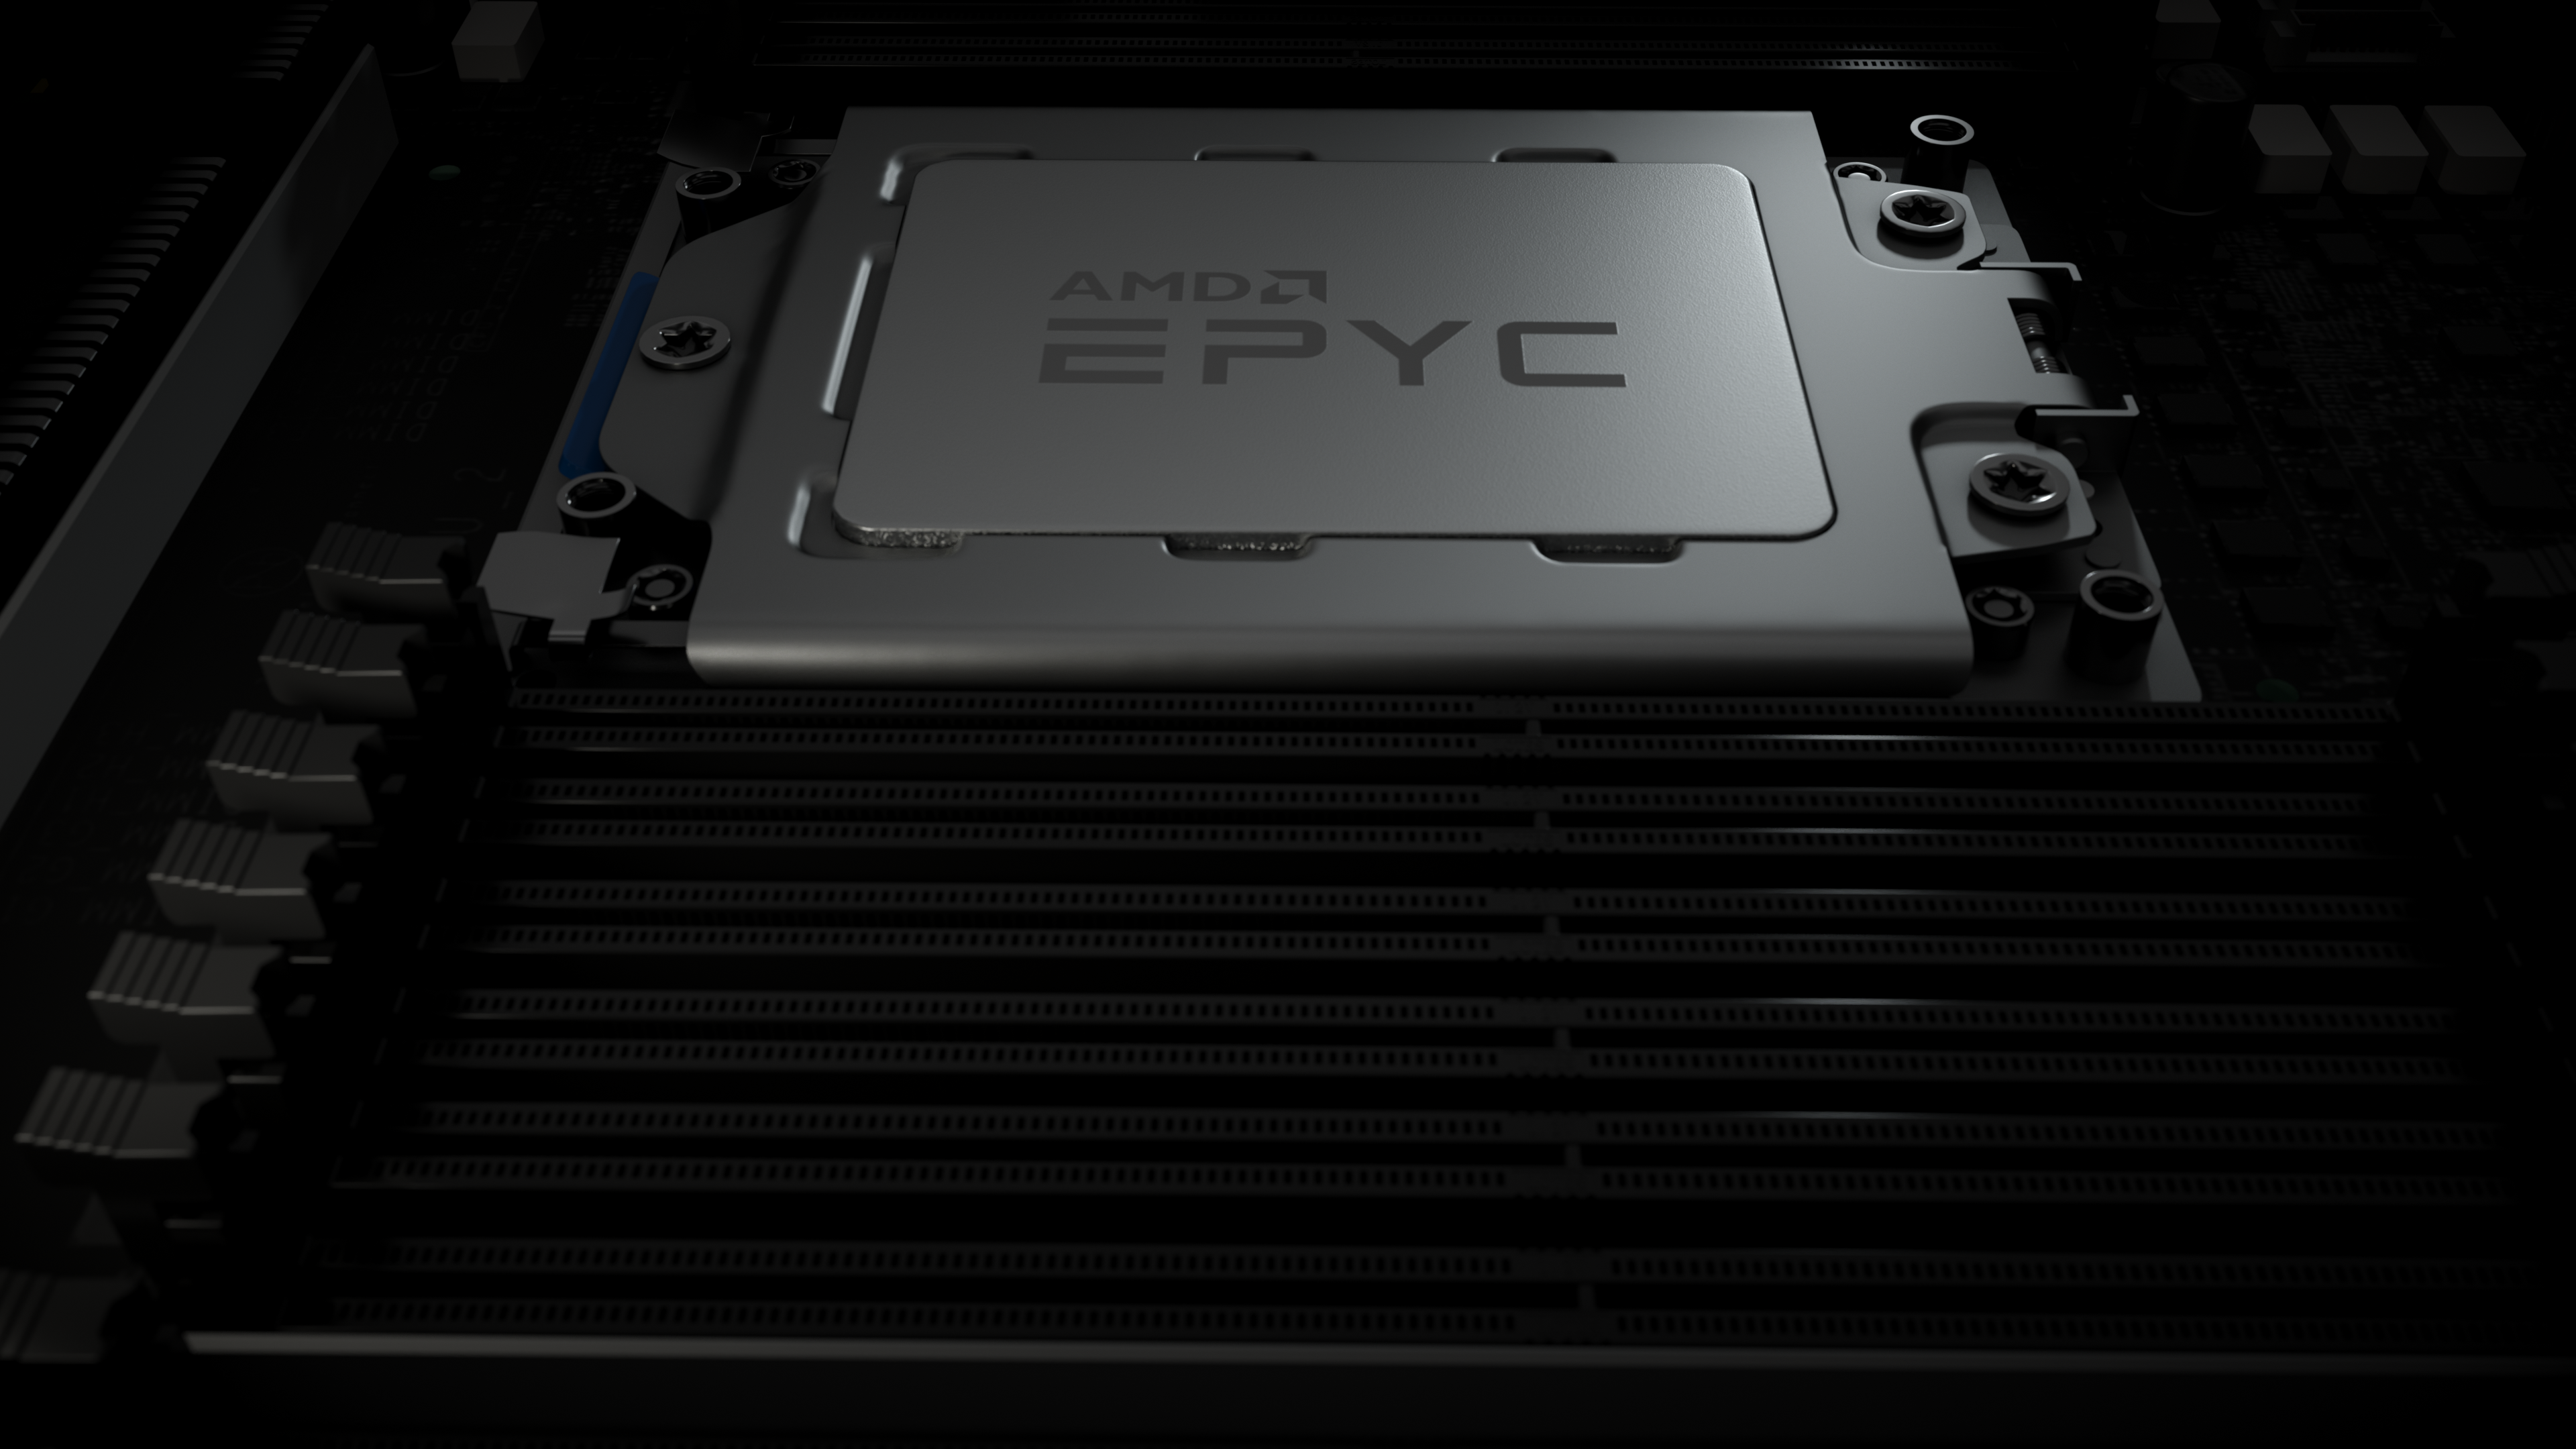 AMD's second-generation Epyc server processor, codenamed 